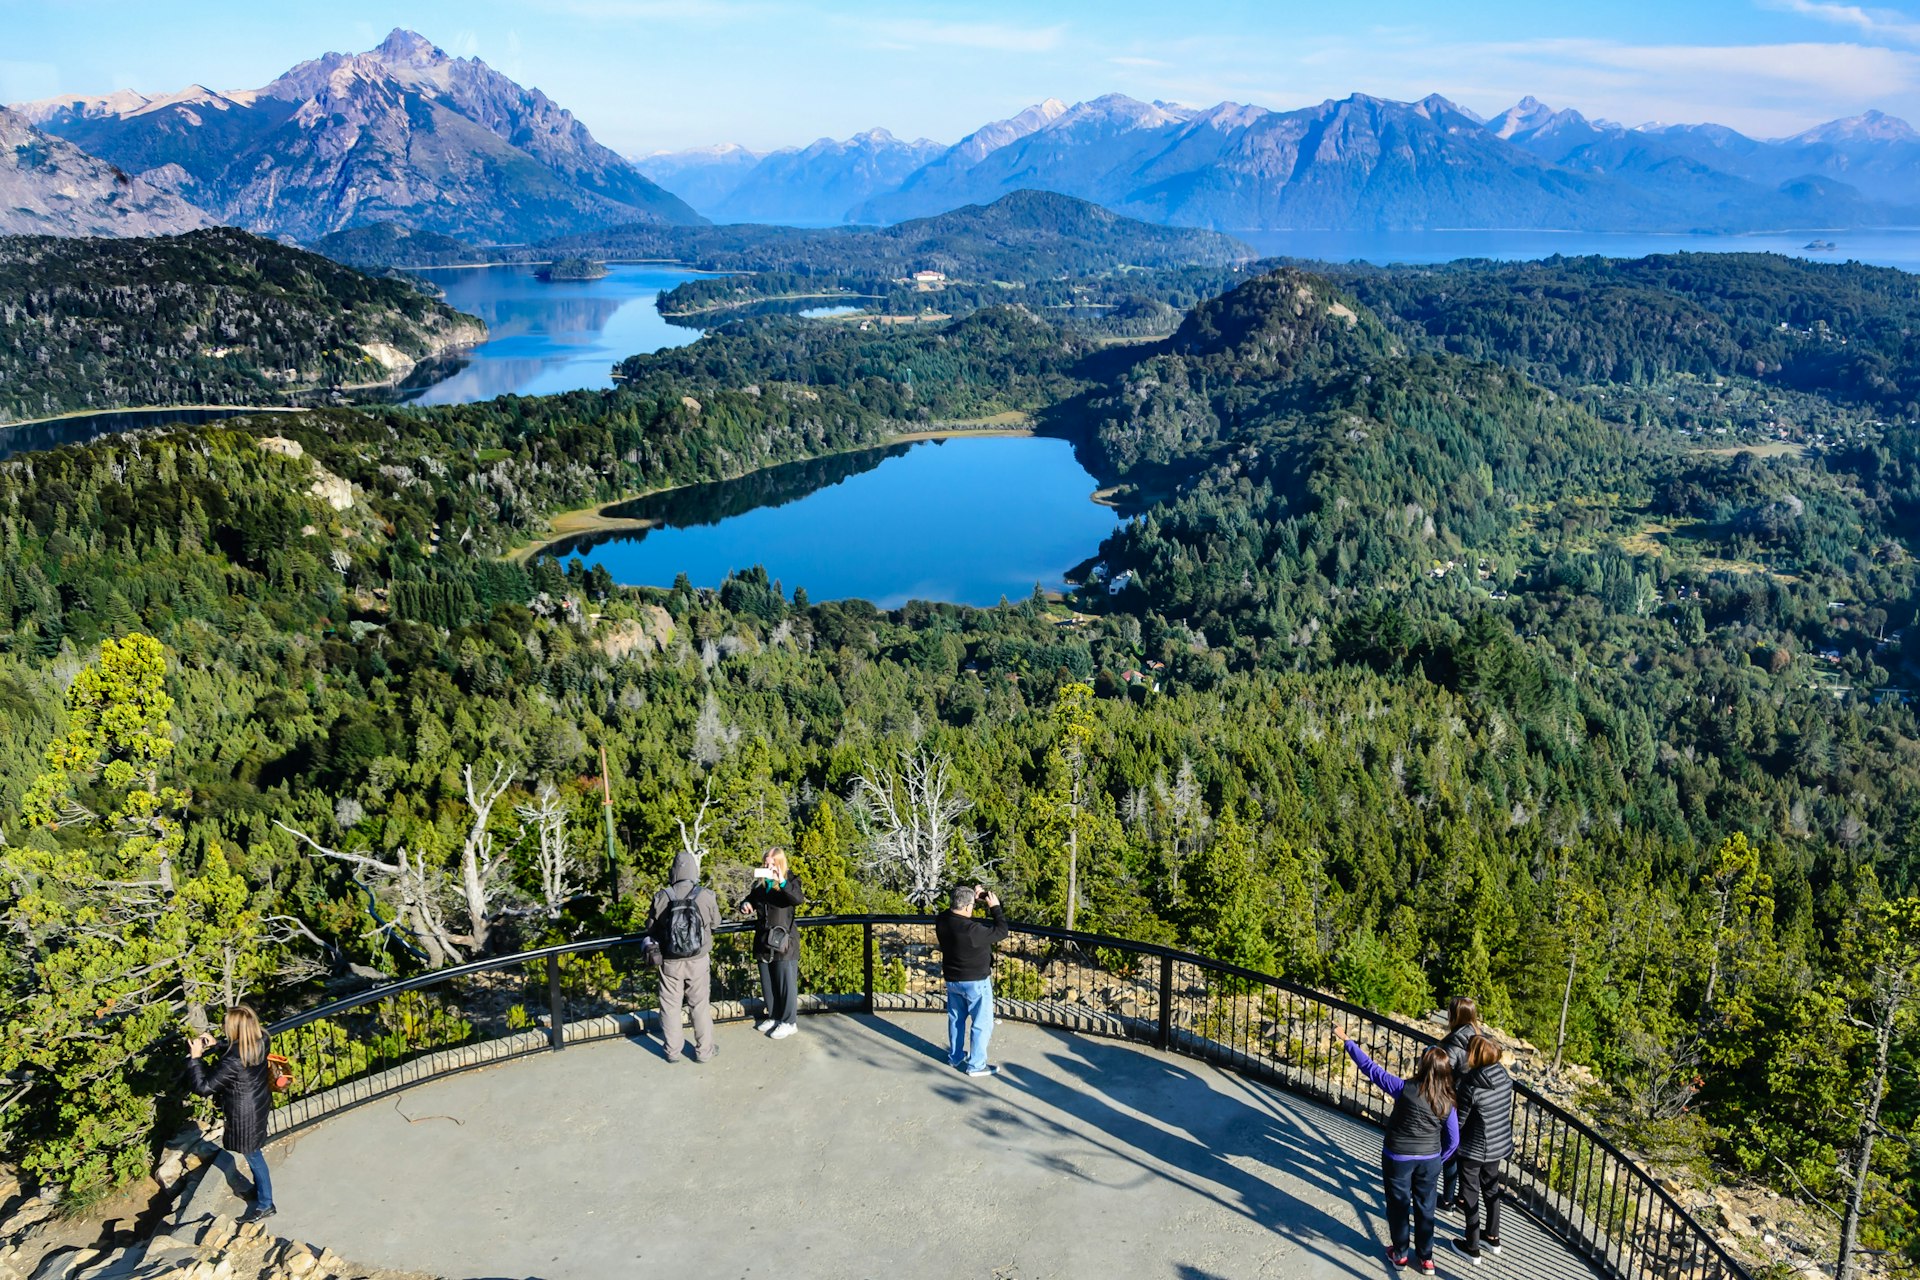 Tourists take photos above the lakes and the mountainous slopes of Nahuel Huapi National Park, Argentina